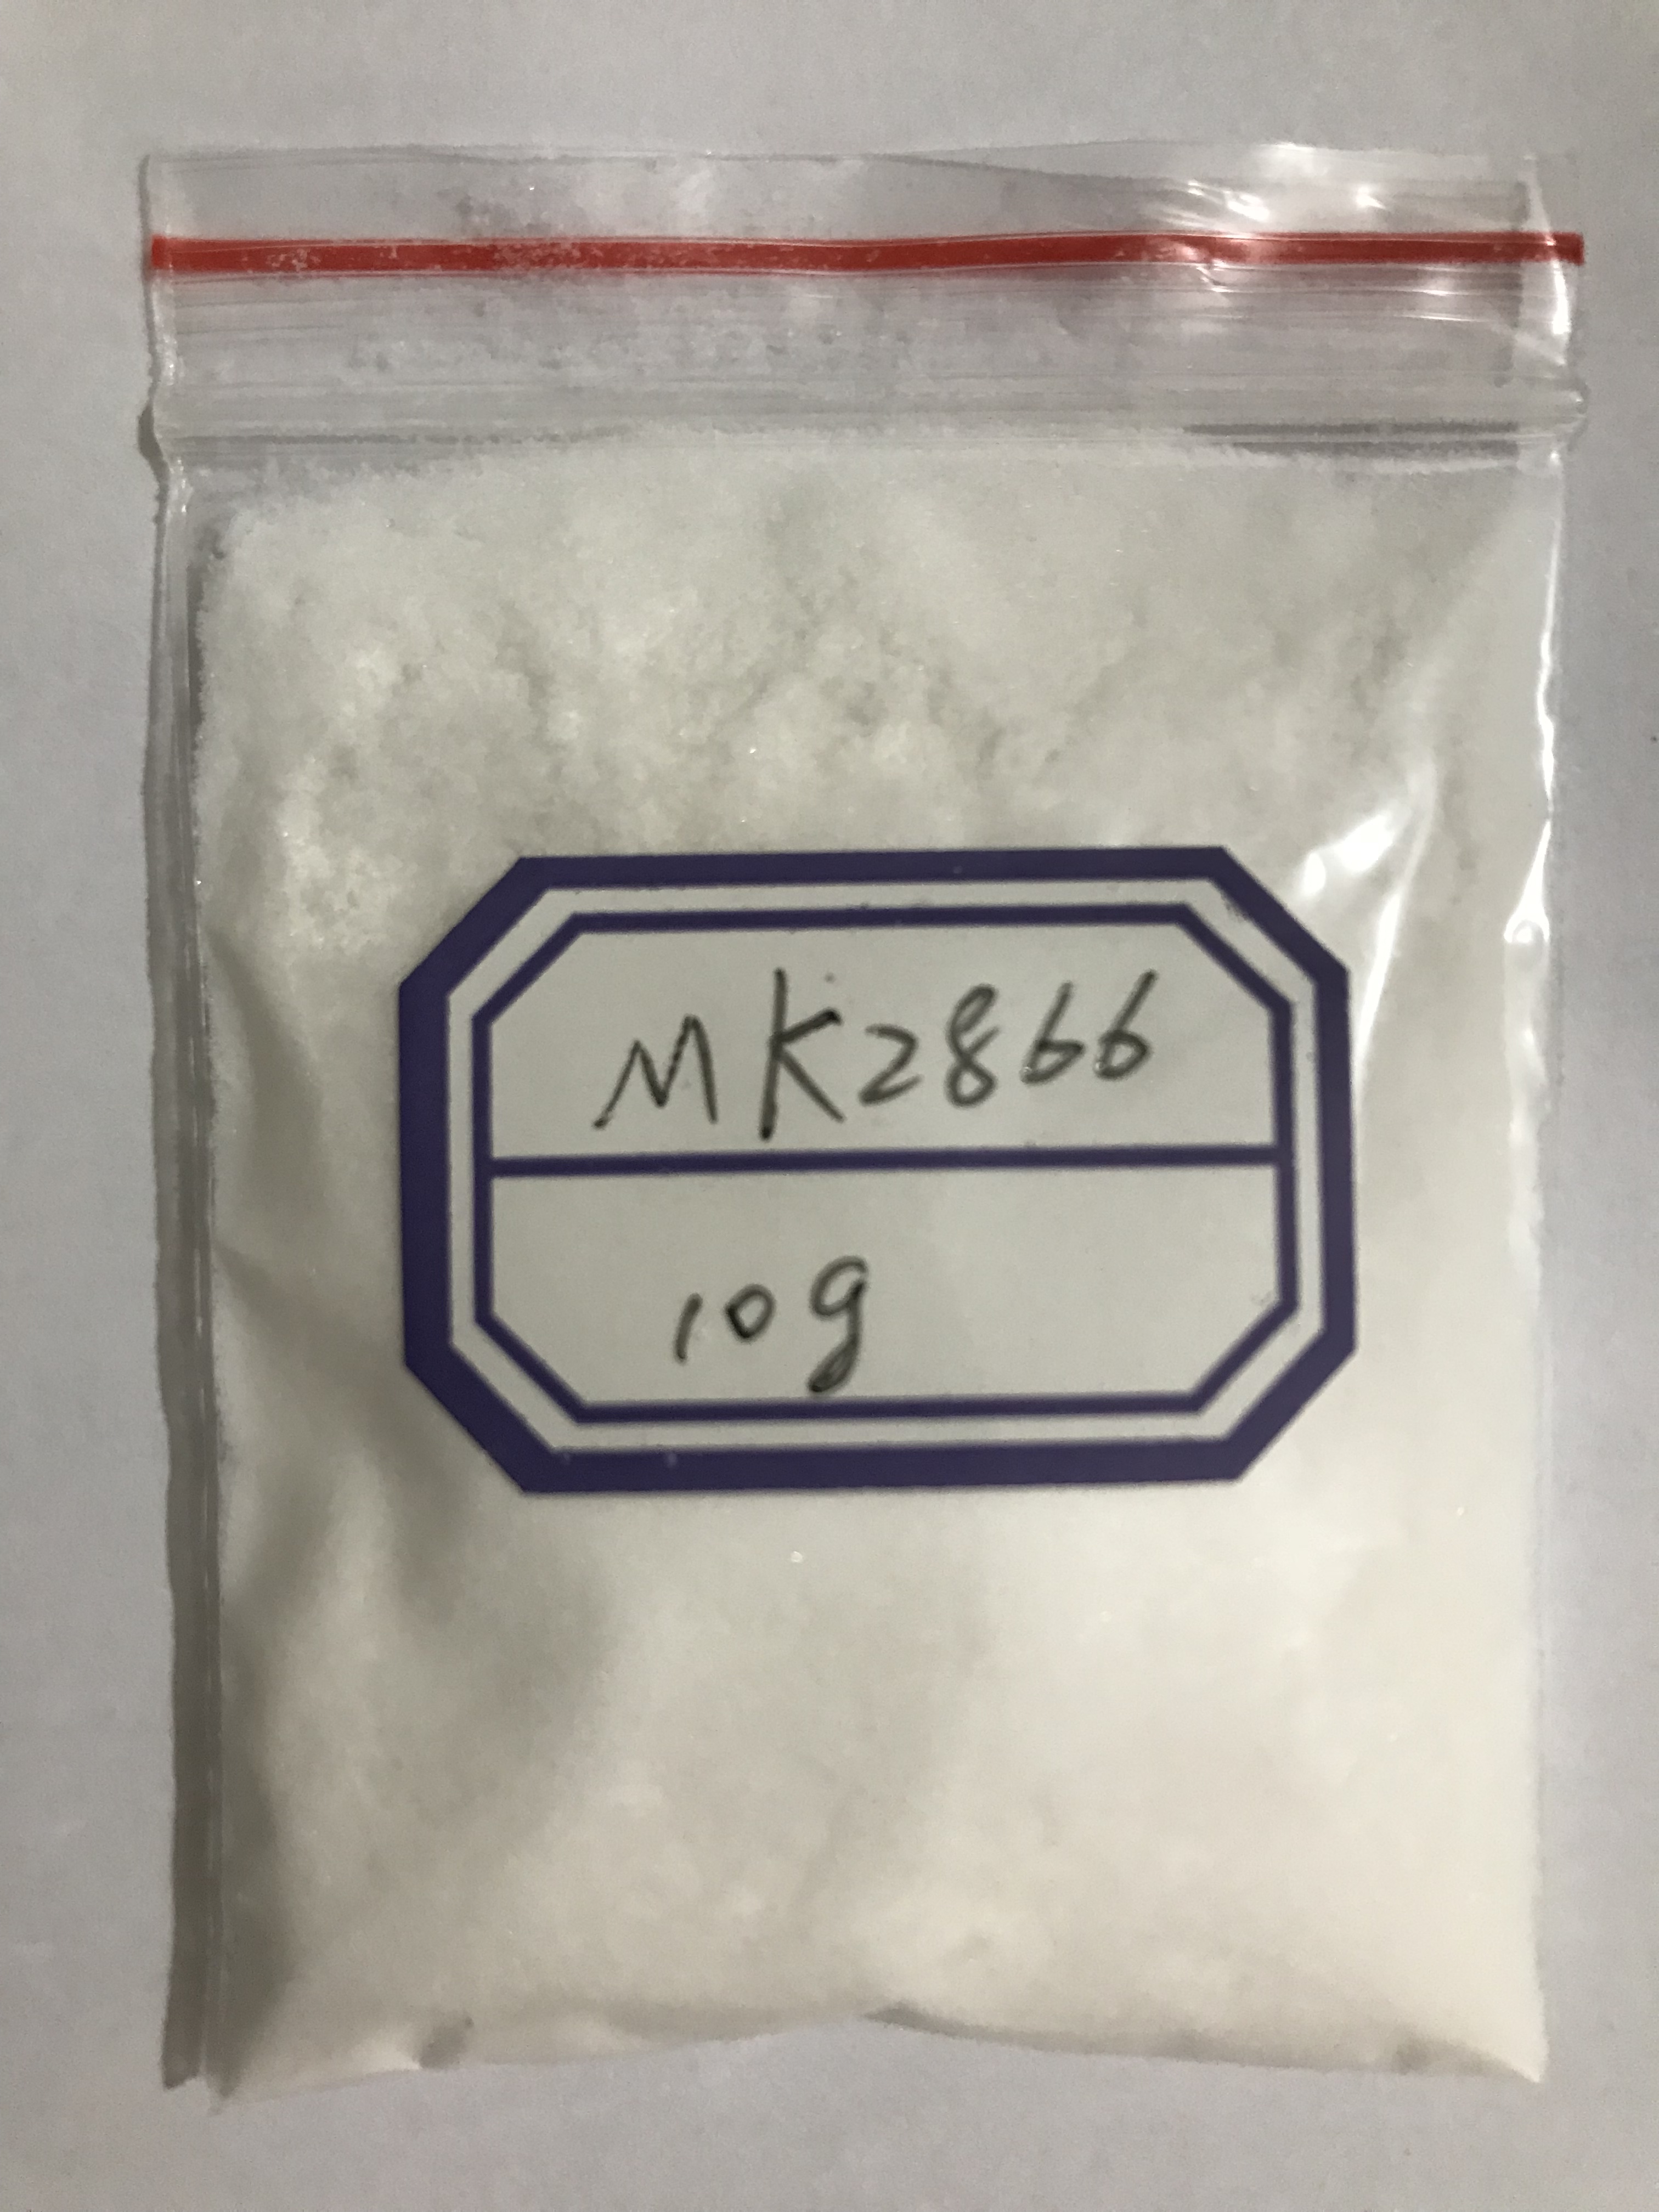 MK-2866 ostarine  powder Supply sales